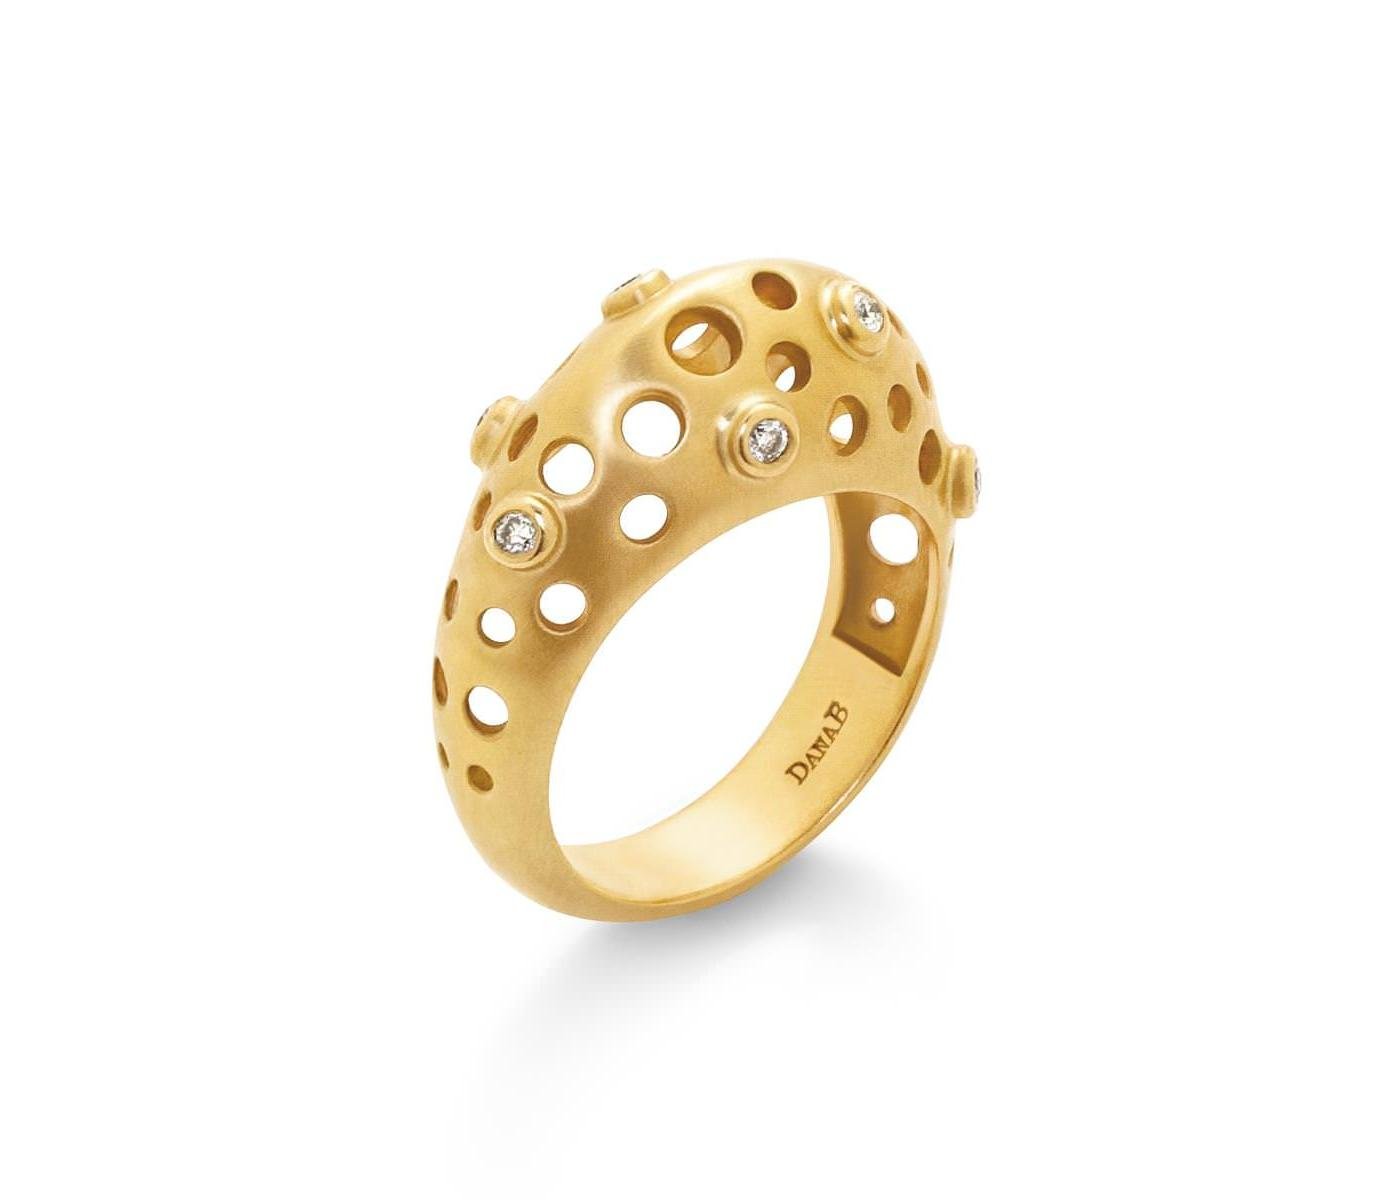 Ring by Dana Bronfman